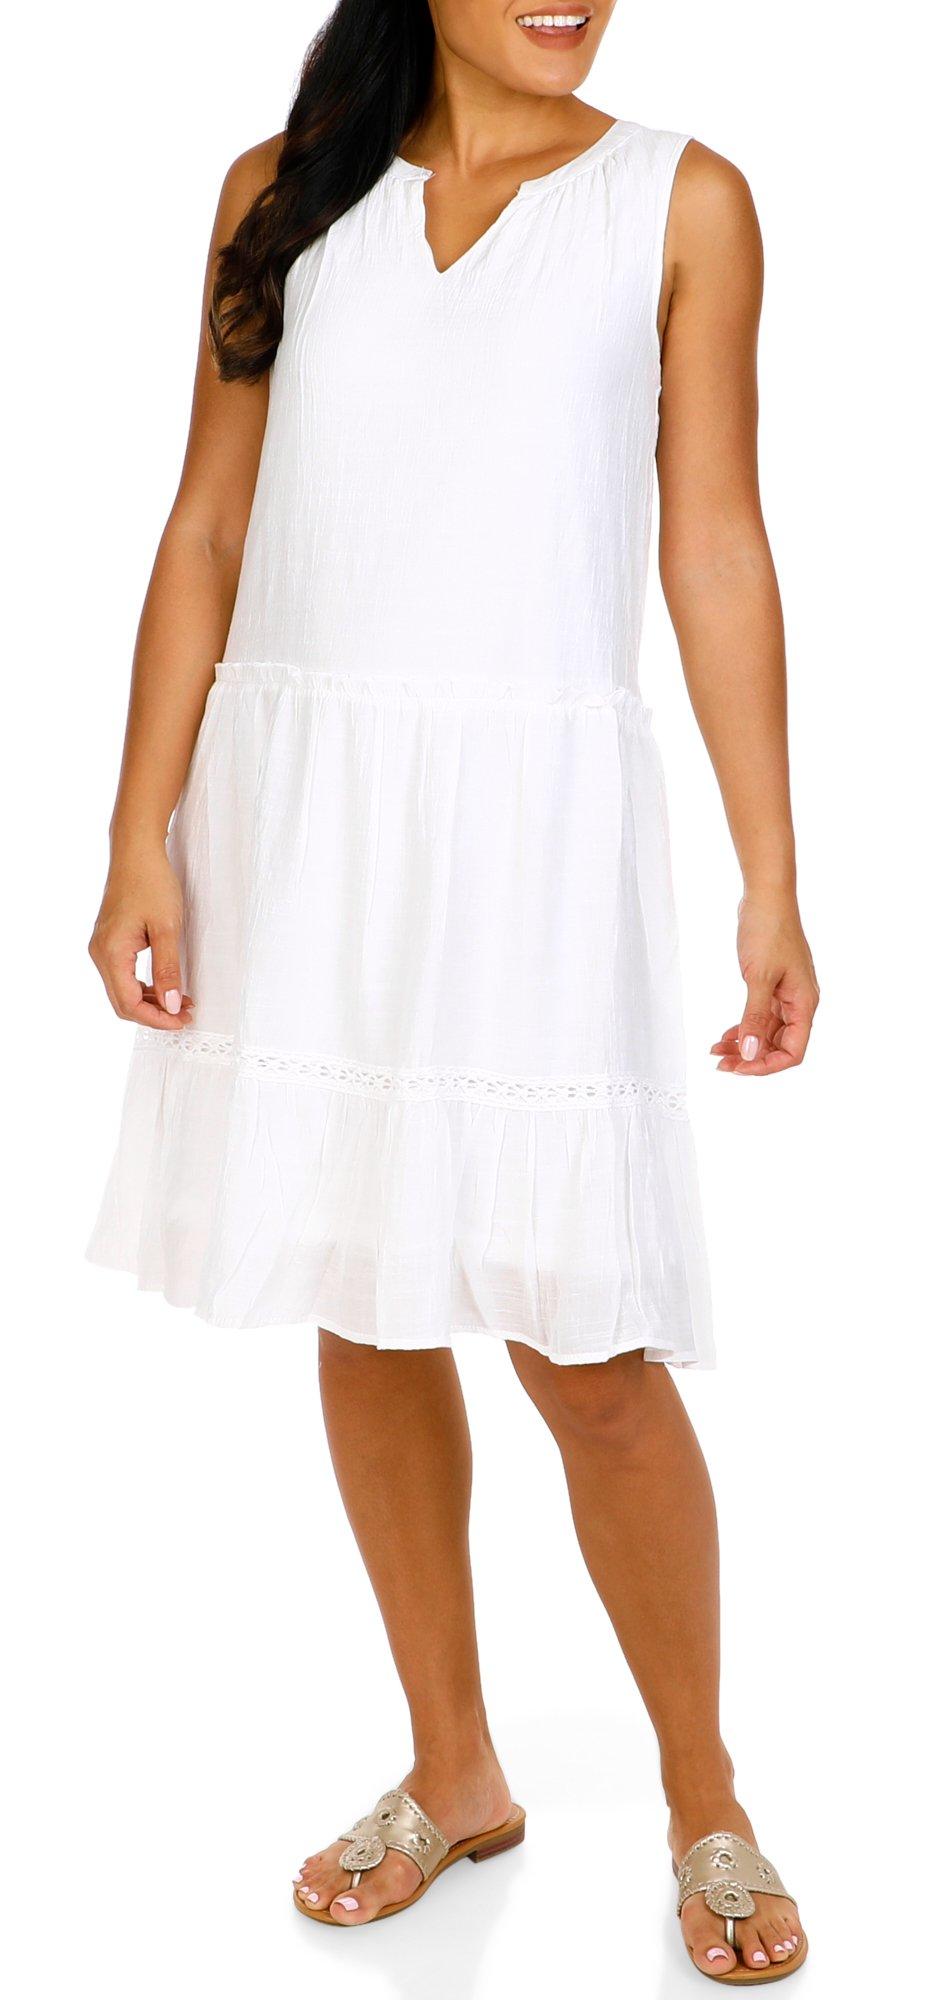 Women's Solid Sleeveless Dress